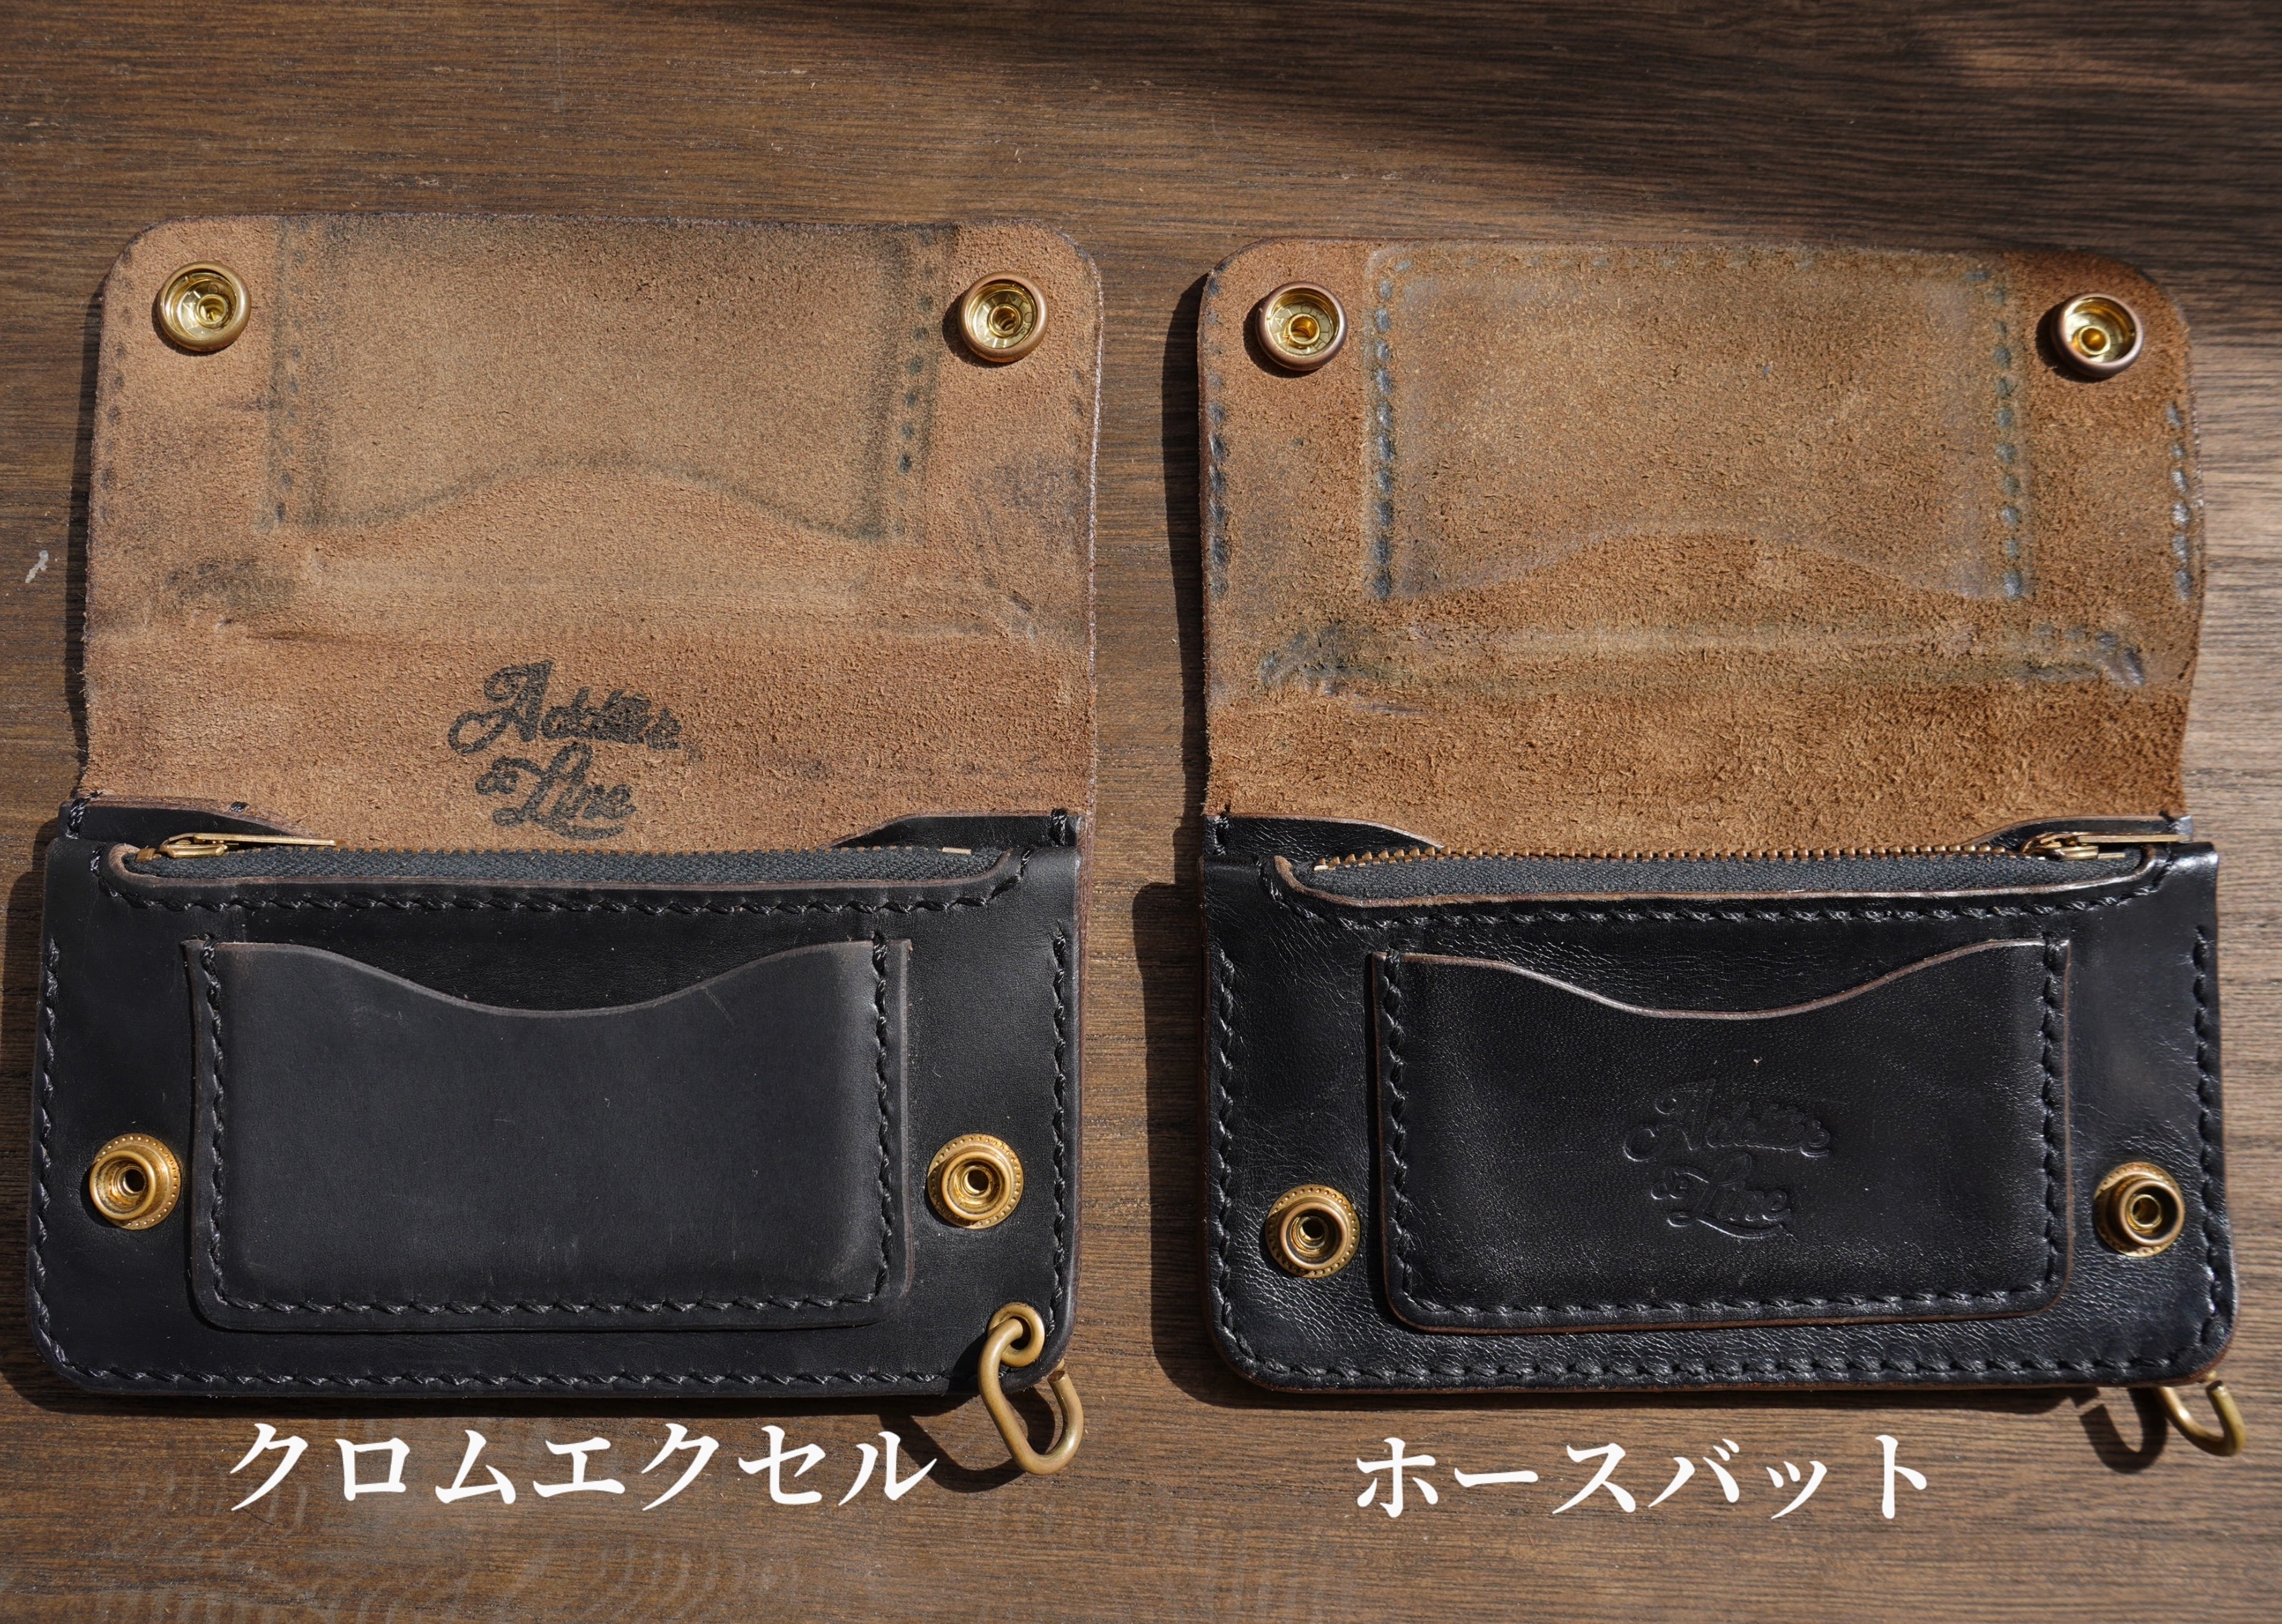 Additive and Line 茶芯 ホースバット トラッカーウォレット - 折り財布